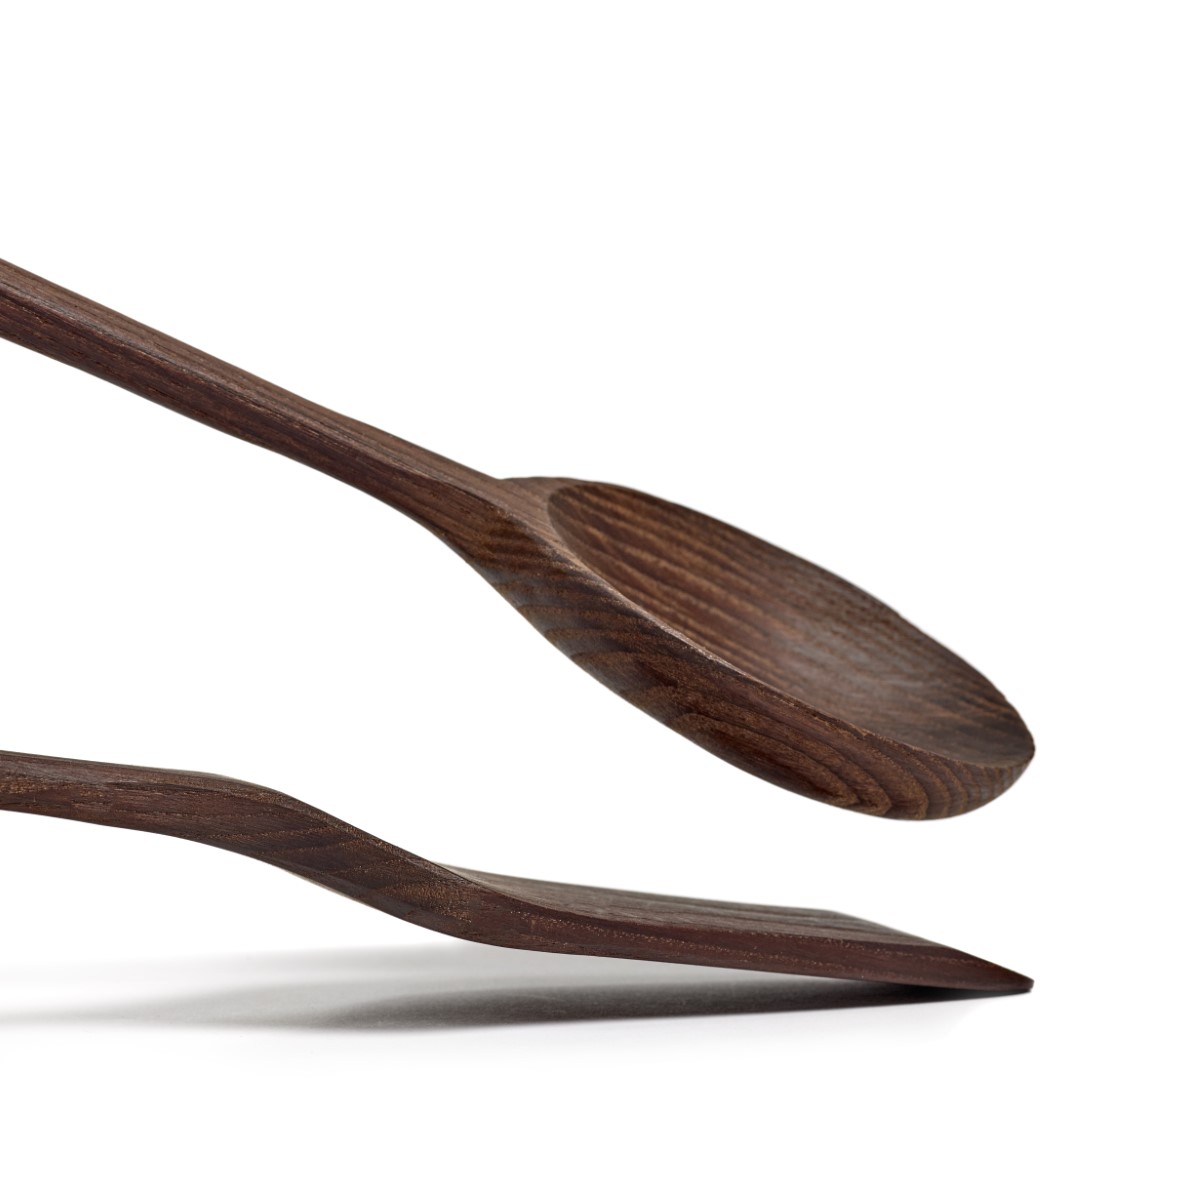 Set de utensilios de cocina en madera de fresno carbonizado Colección PURE detalle